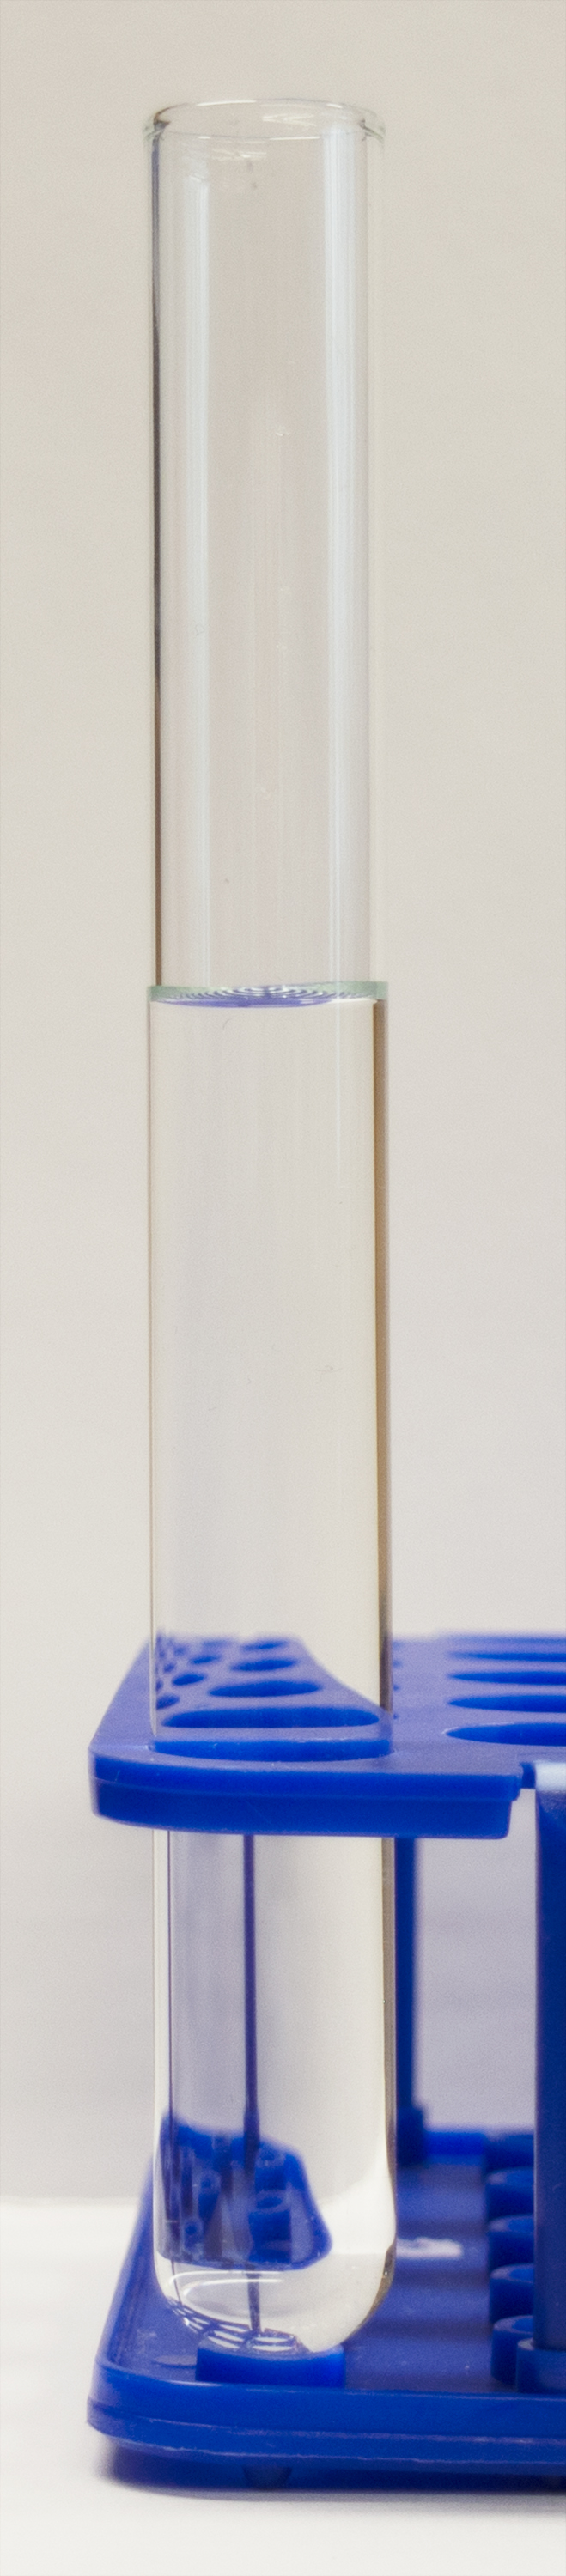 Clear brine in a test tube